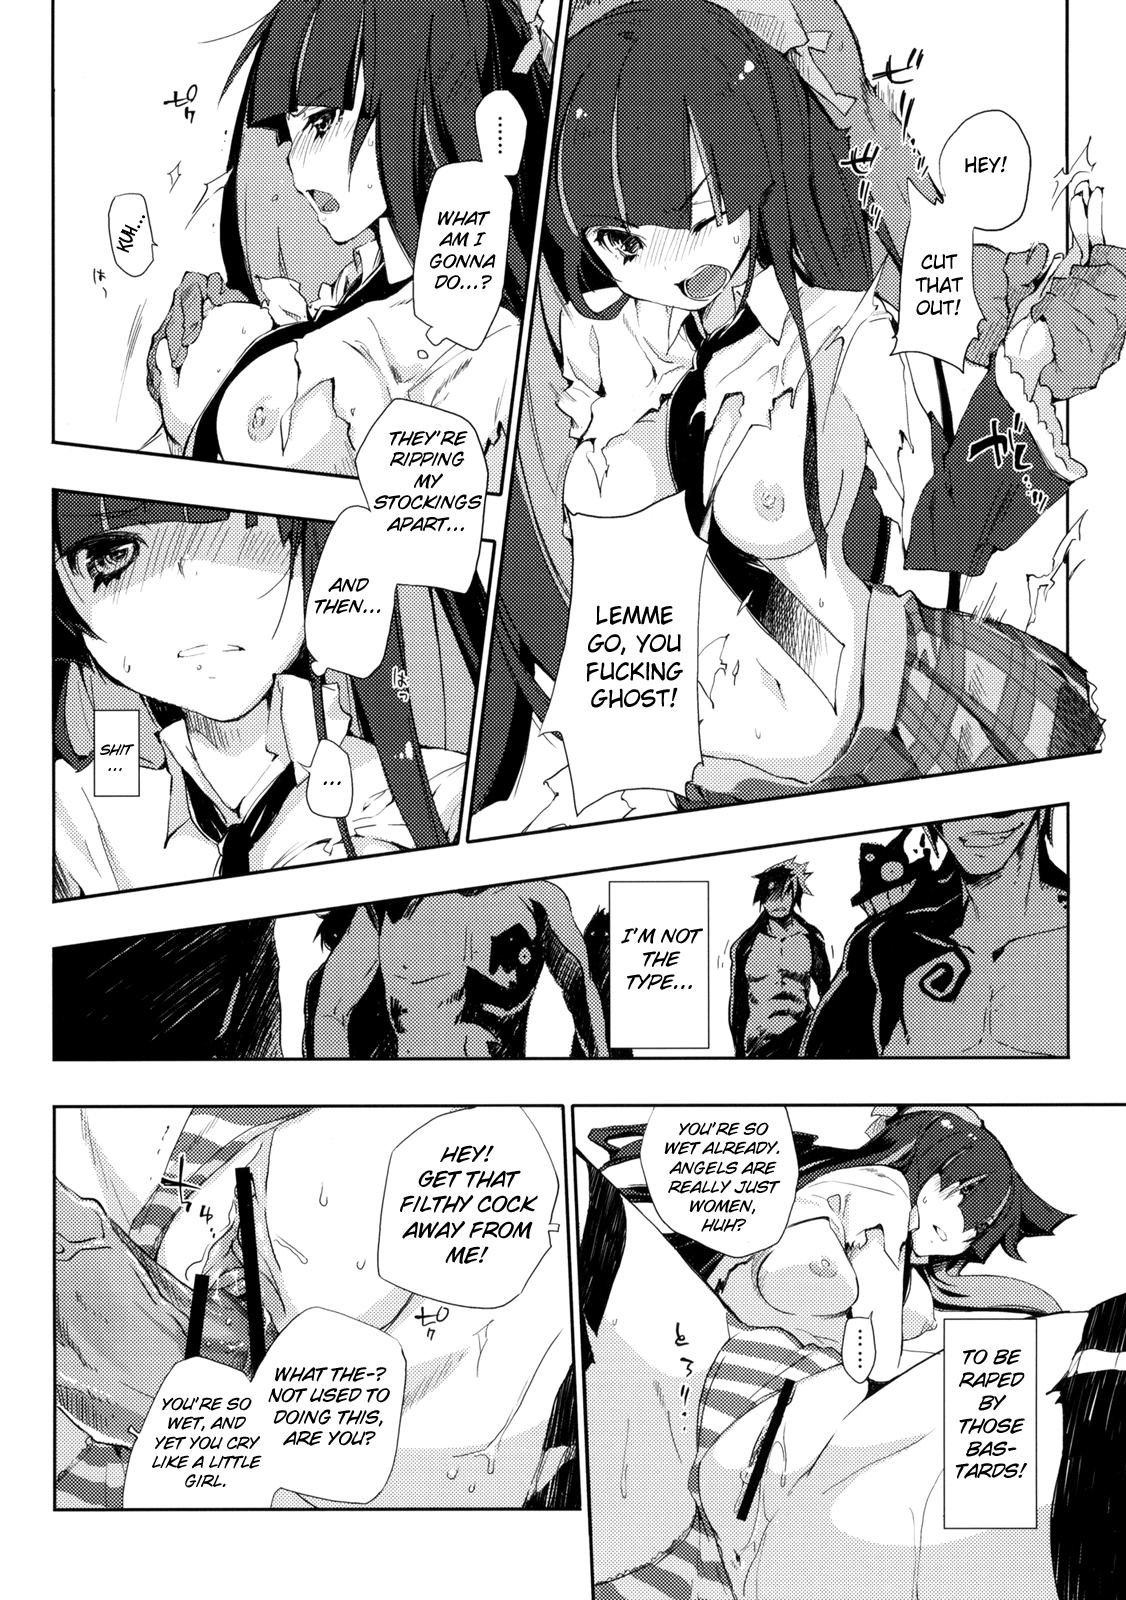 inmoral unmoral hentai manga picture 7